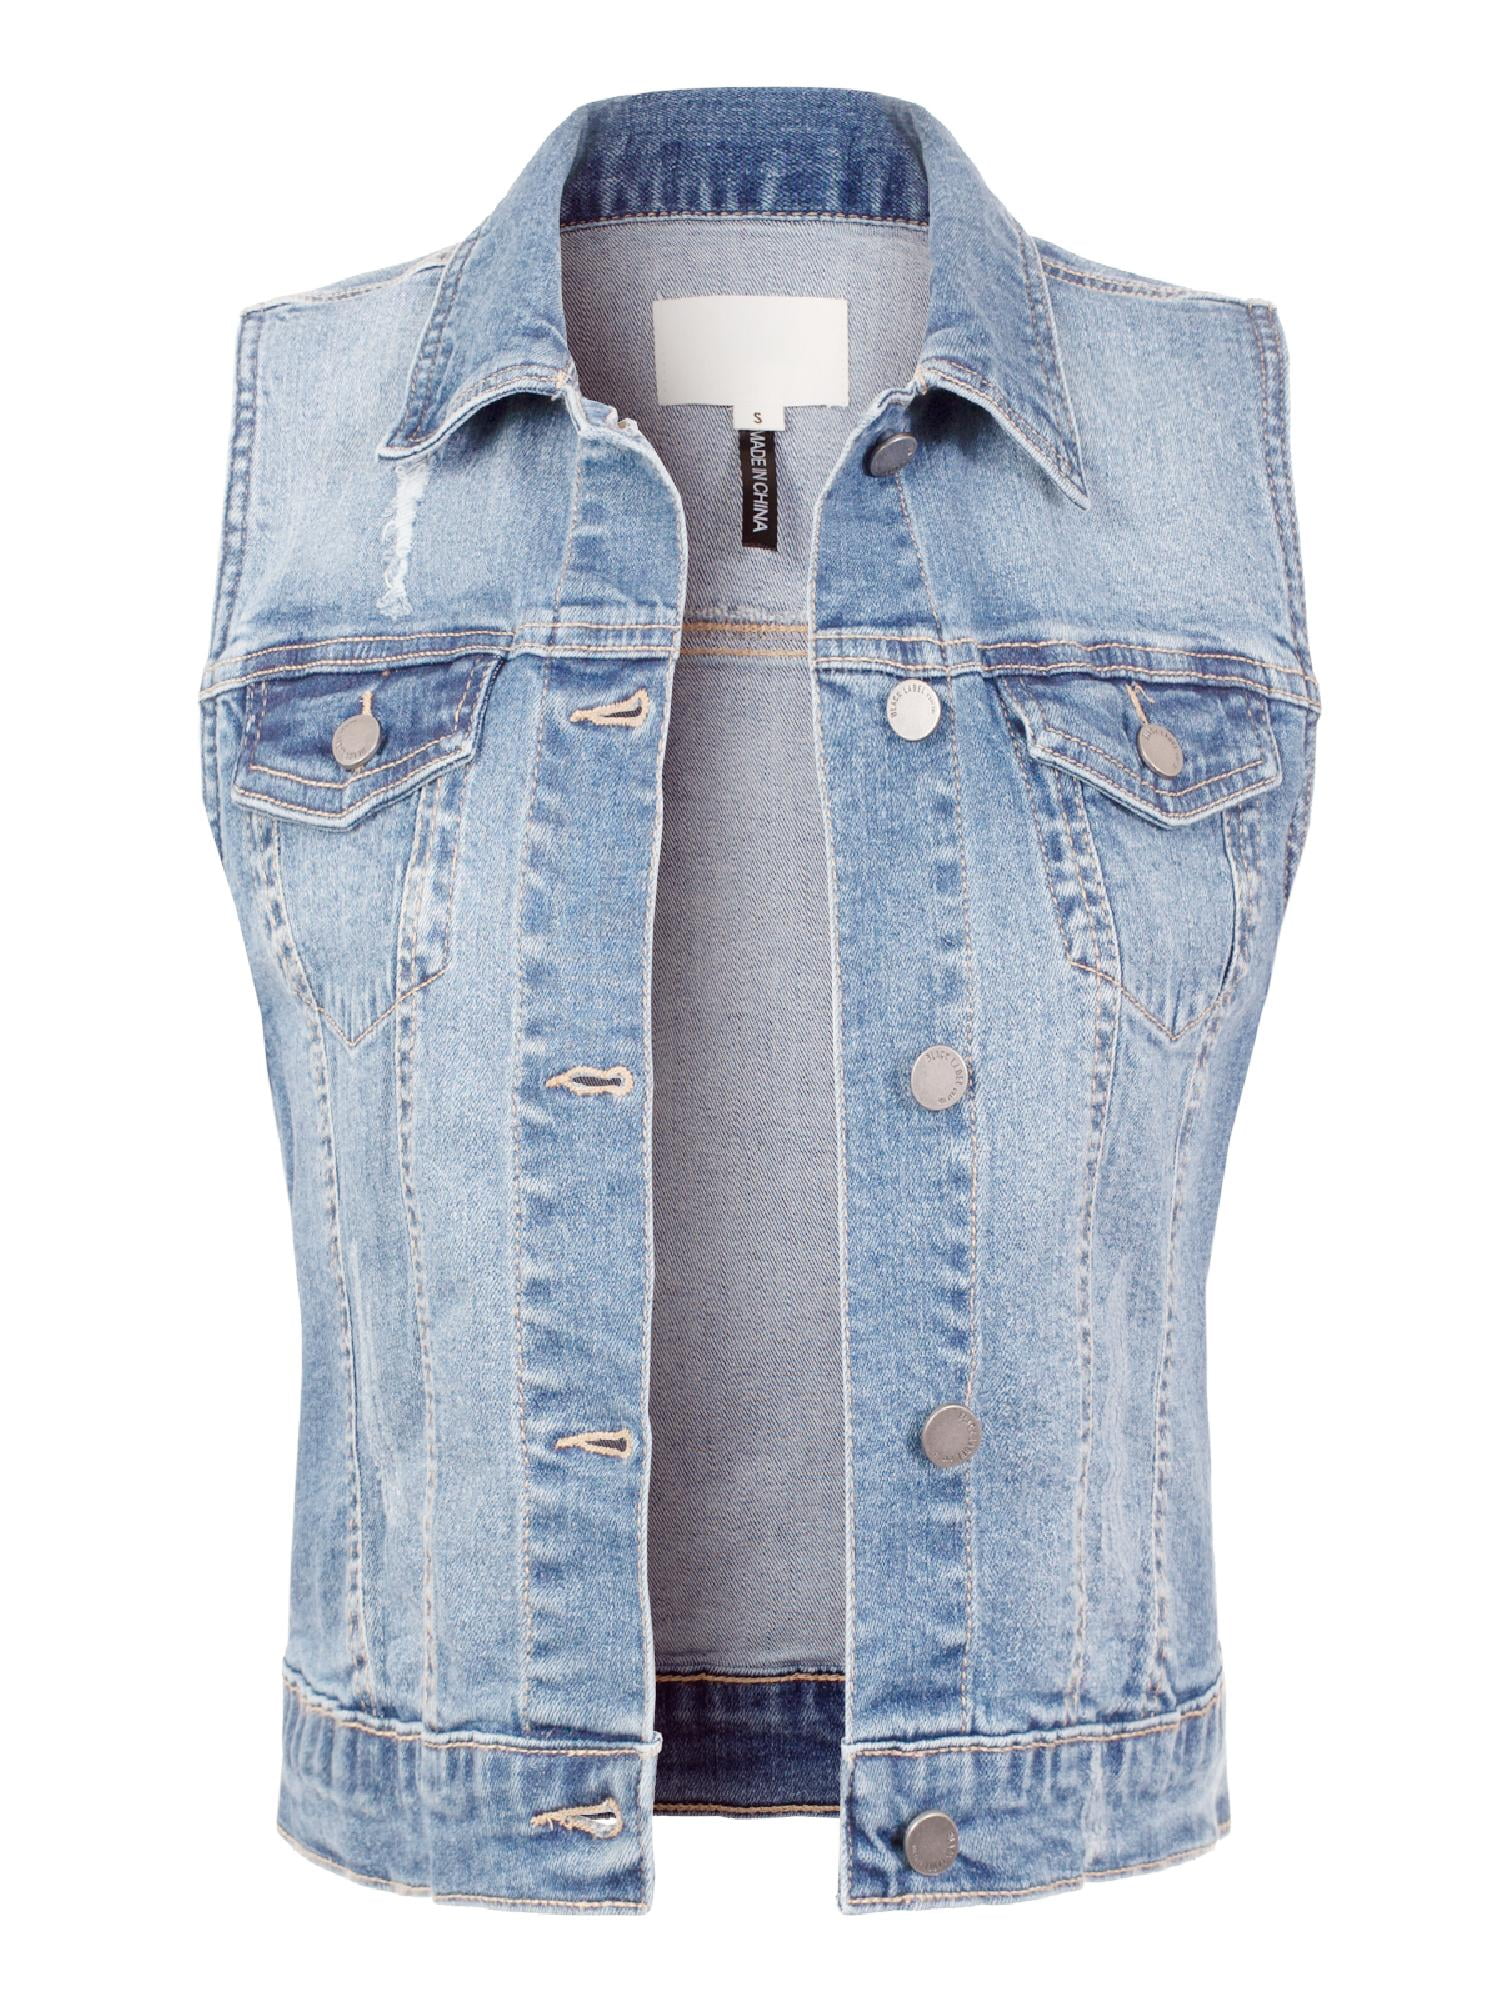 Design by Olivia Womens Sleeveless Button up Jean Denim Jacket Vest 